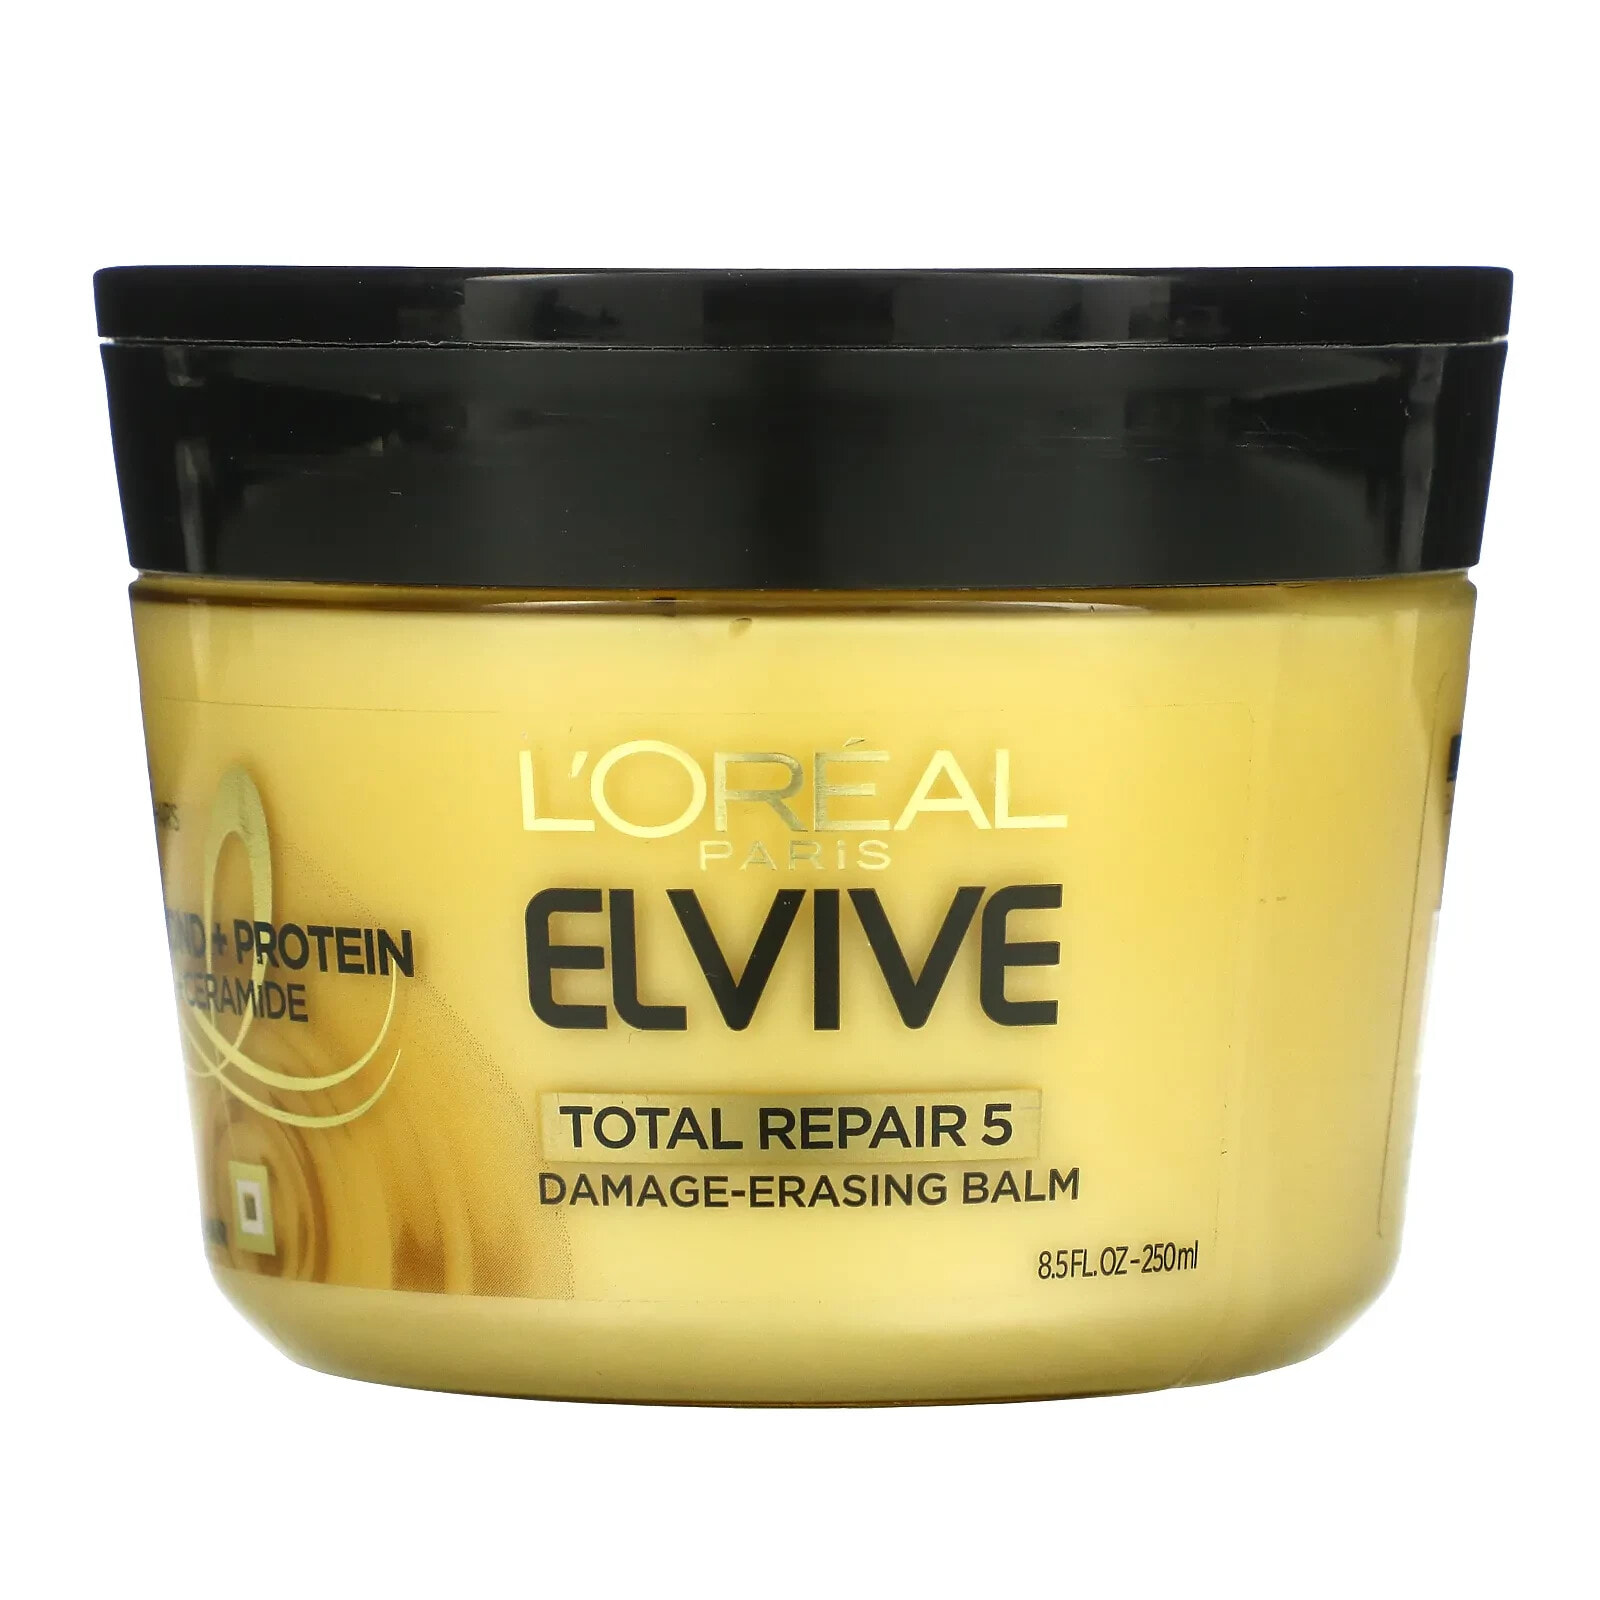 Elvive, Total Repair 5, Damage-Erasing Balm, 8.5 fl oz (250 ml)